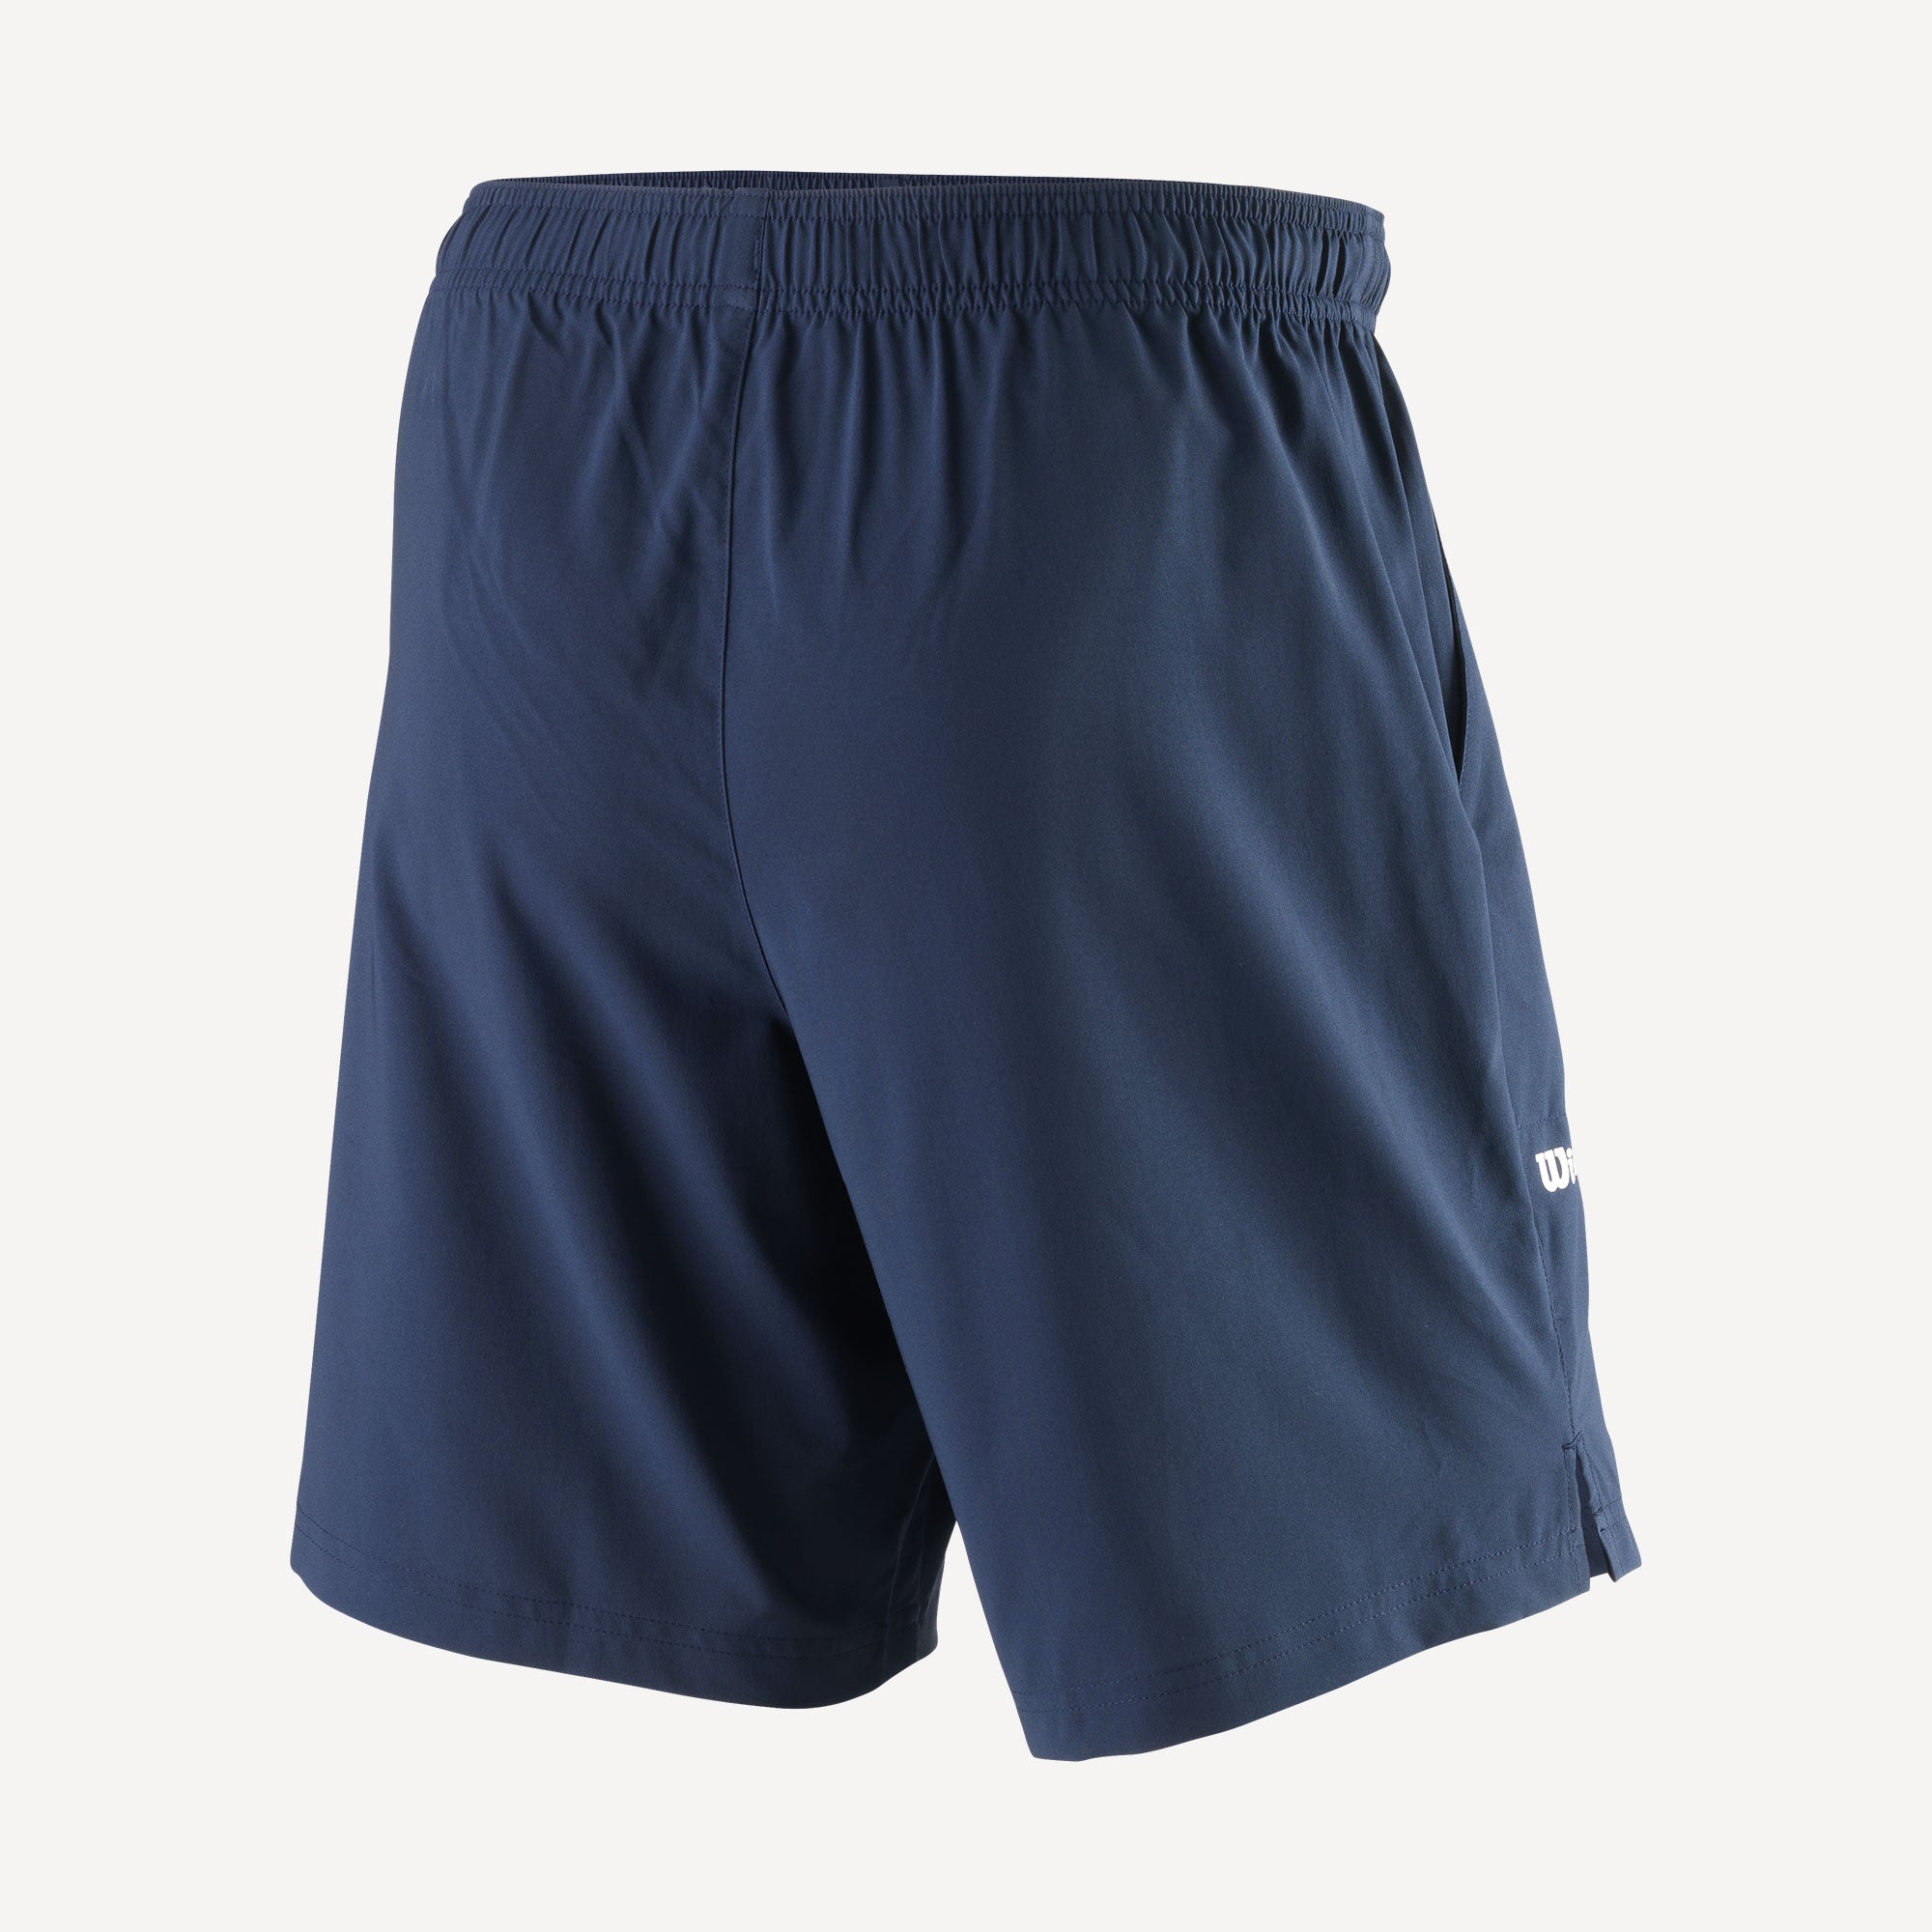 Wilson Team 2 Men's 8-Inch Tennis Shorts Blue (2)